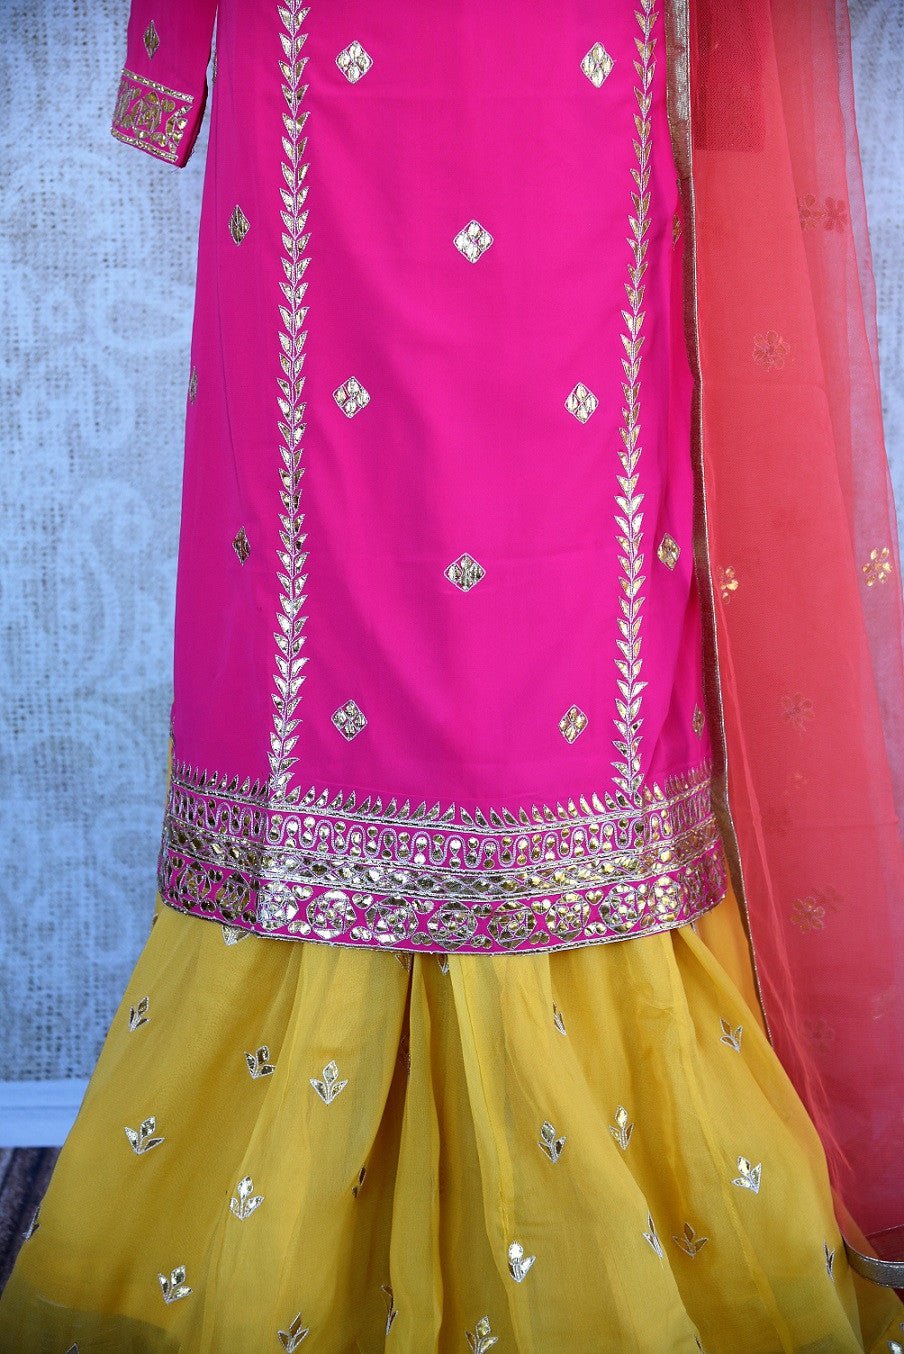 Georgette gota patti palazzo suit with orange net dupatta.Classic festive collection for Indian occasion.-close up gotta patti work